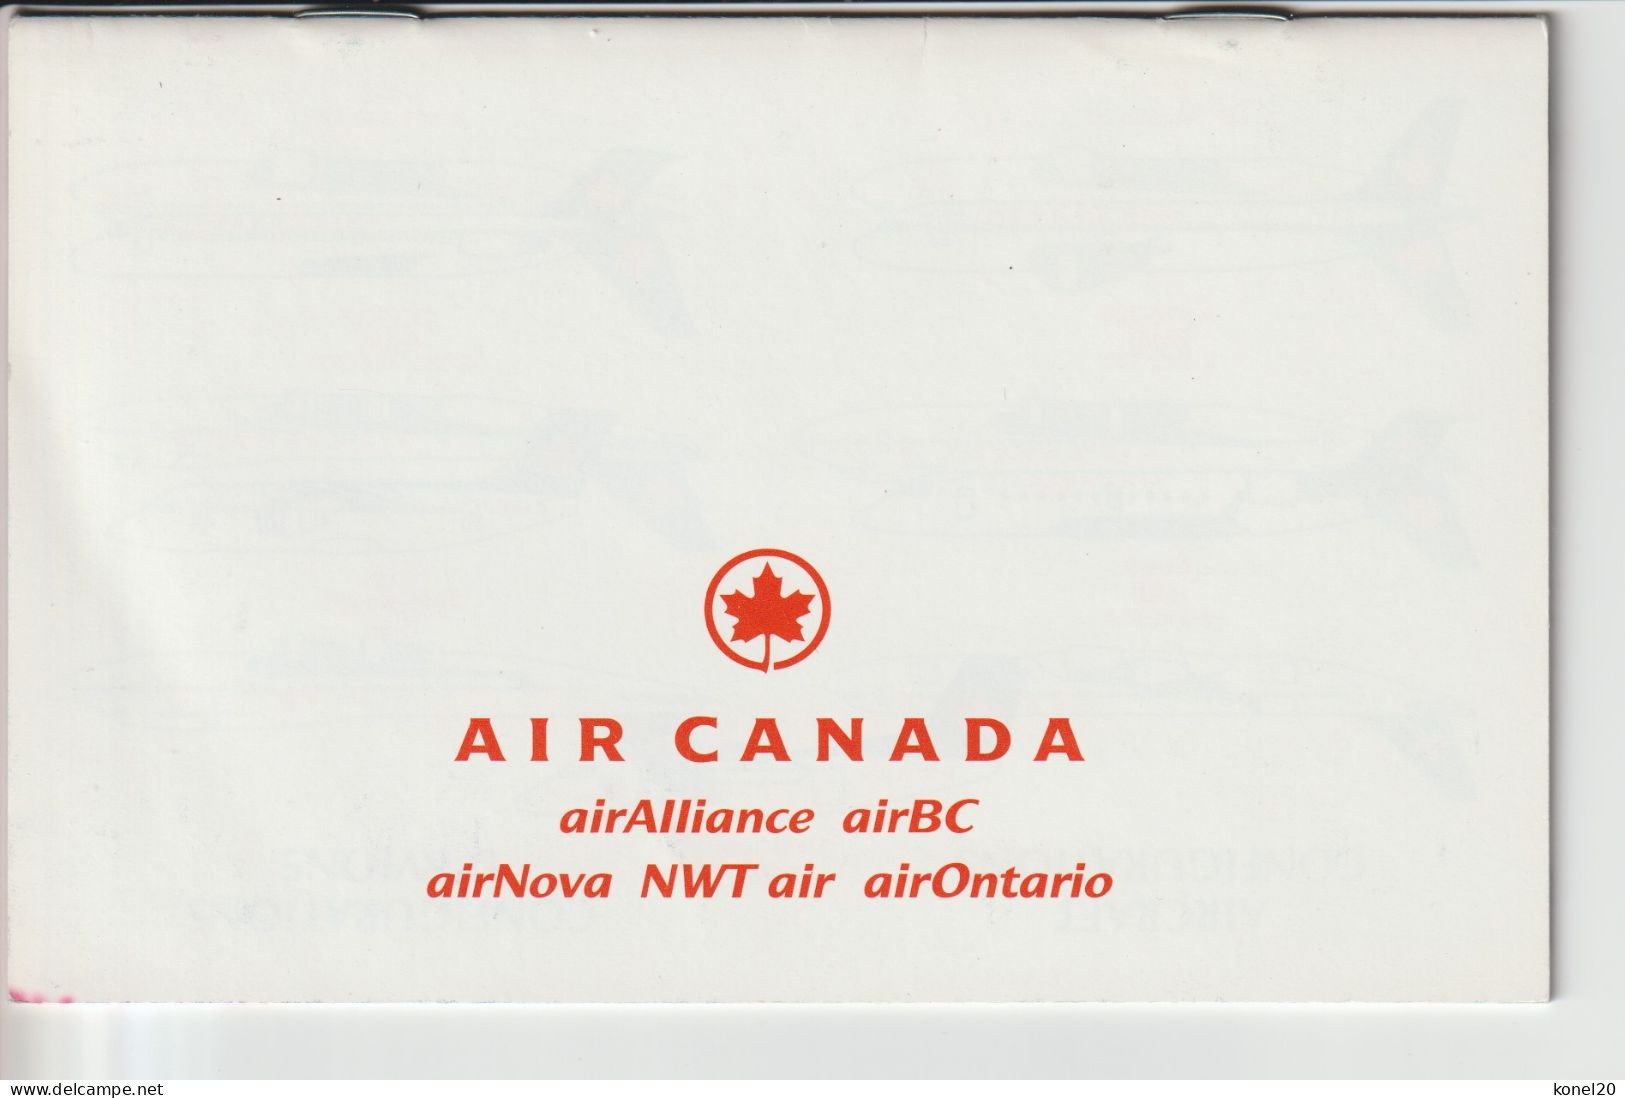 small booklet Air Canada fleet aircraft configurations